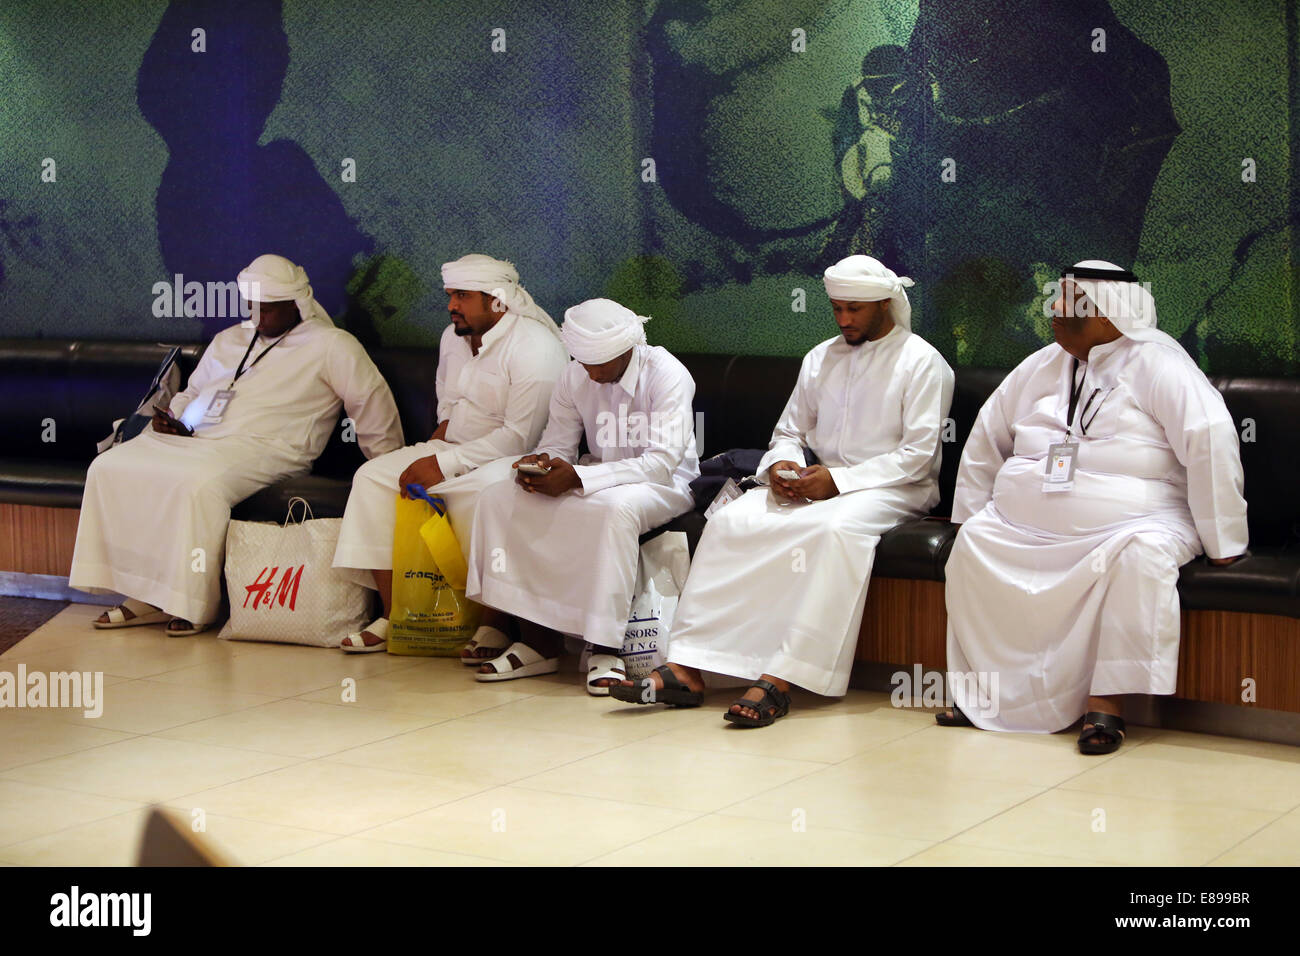 Dubai, United Arab Emirates, men in national dress sitting on a bench Stock Photo